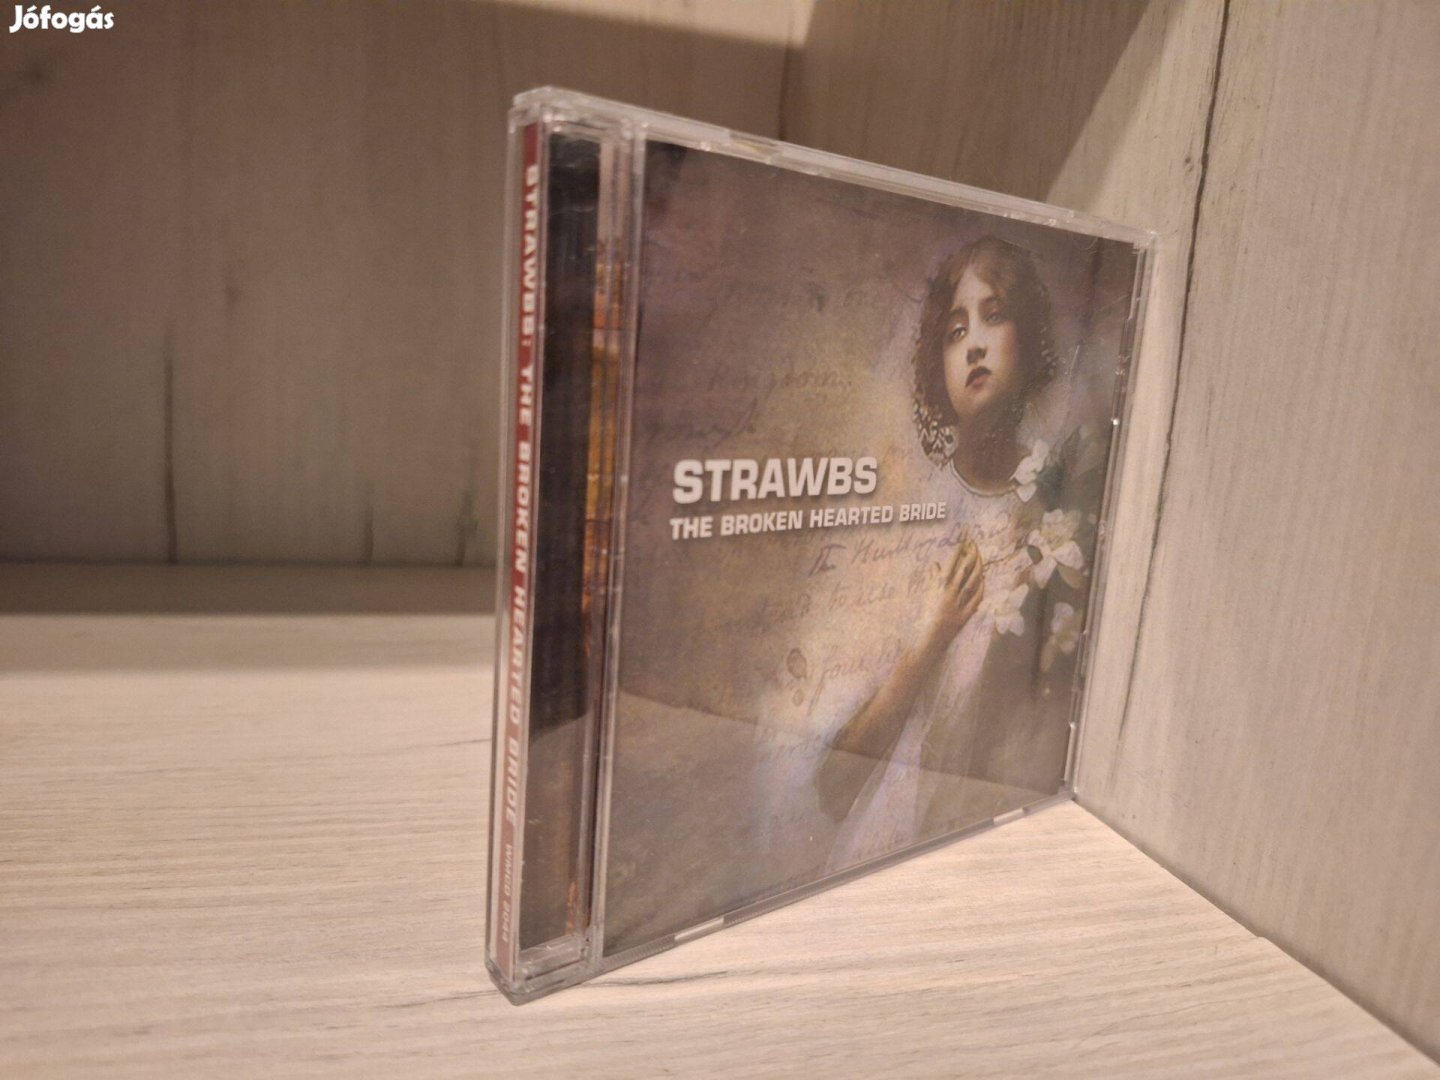 Strawbs - The Broken Hearted Bride CD